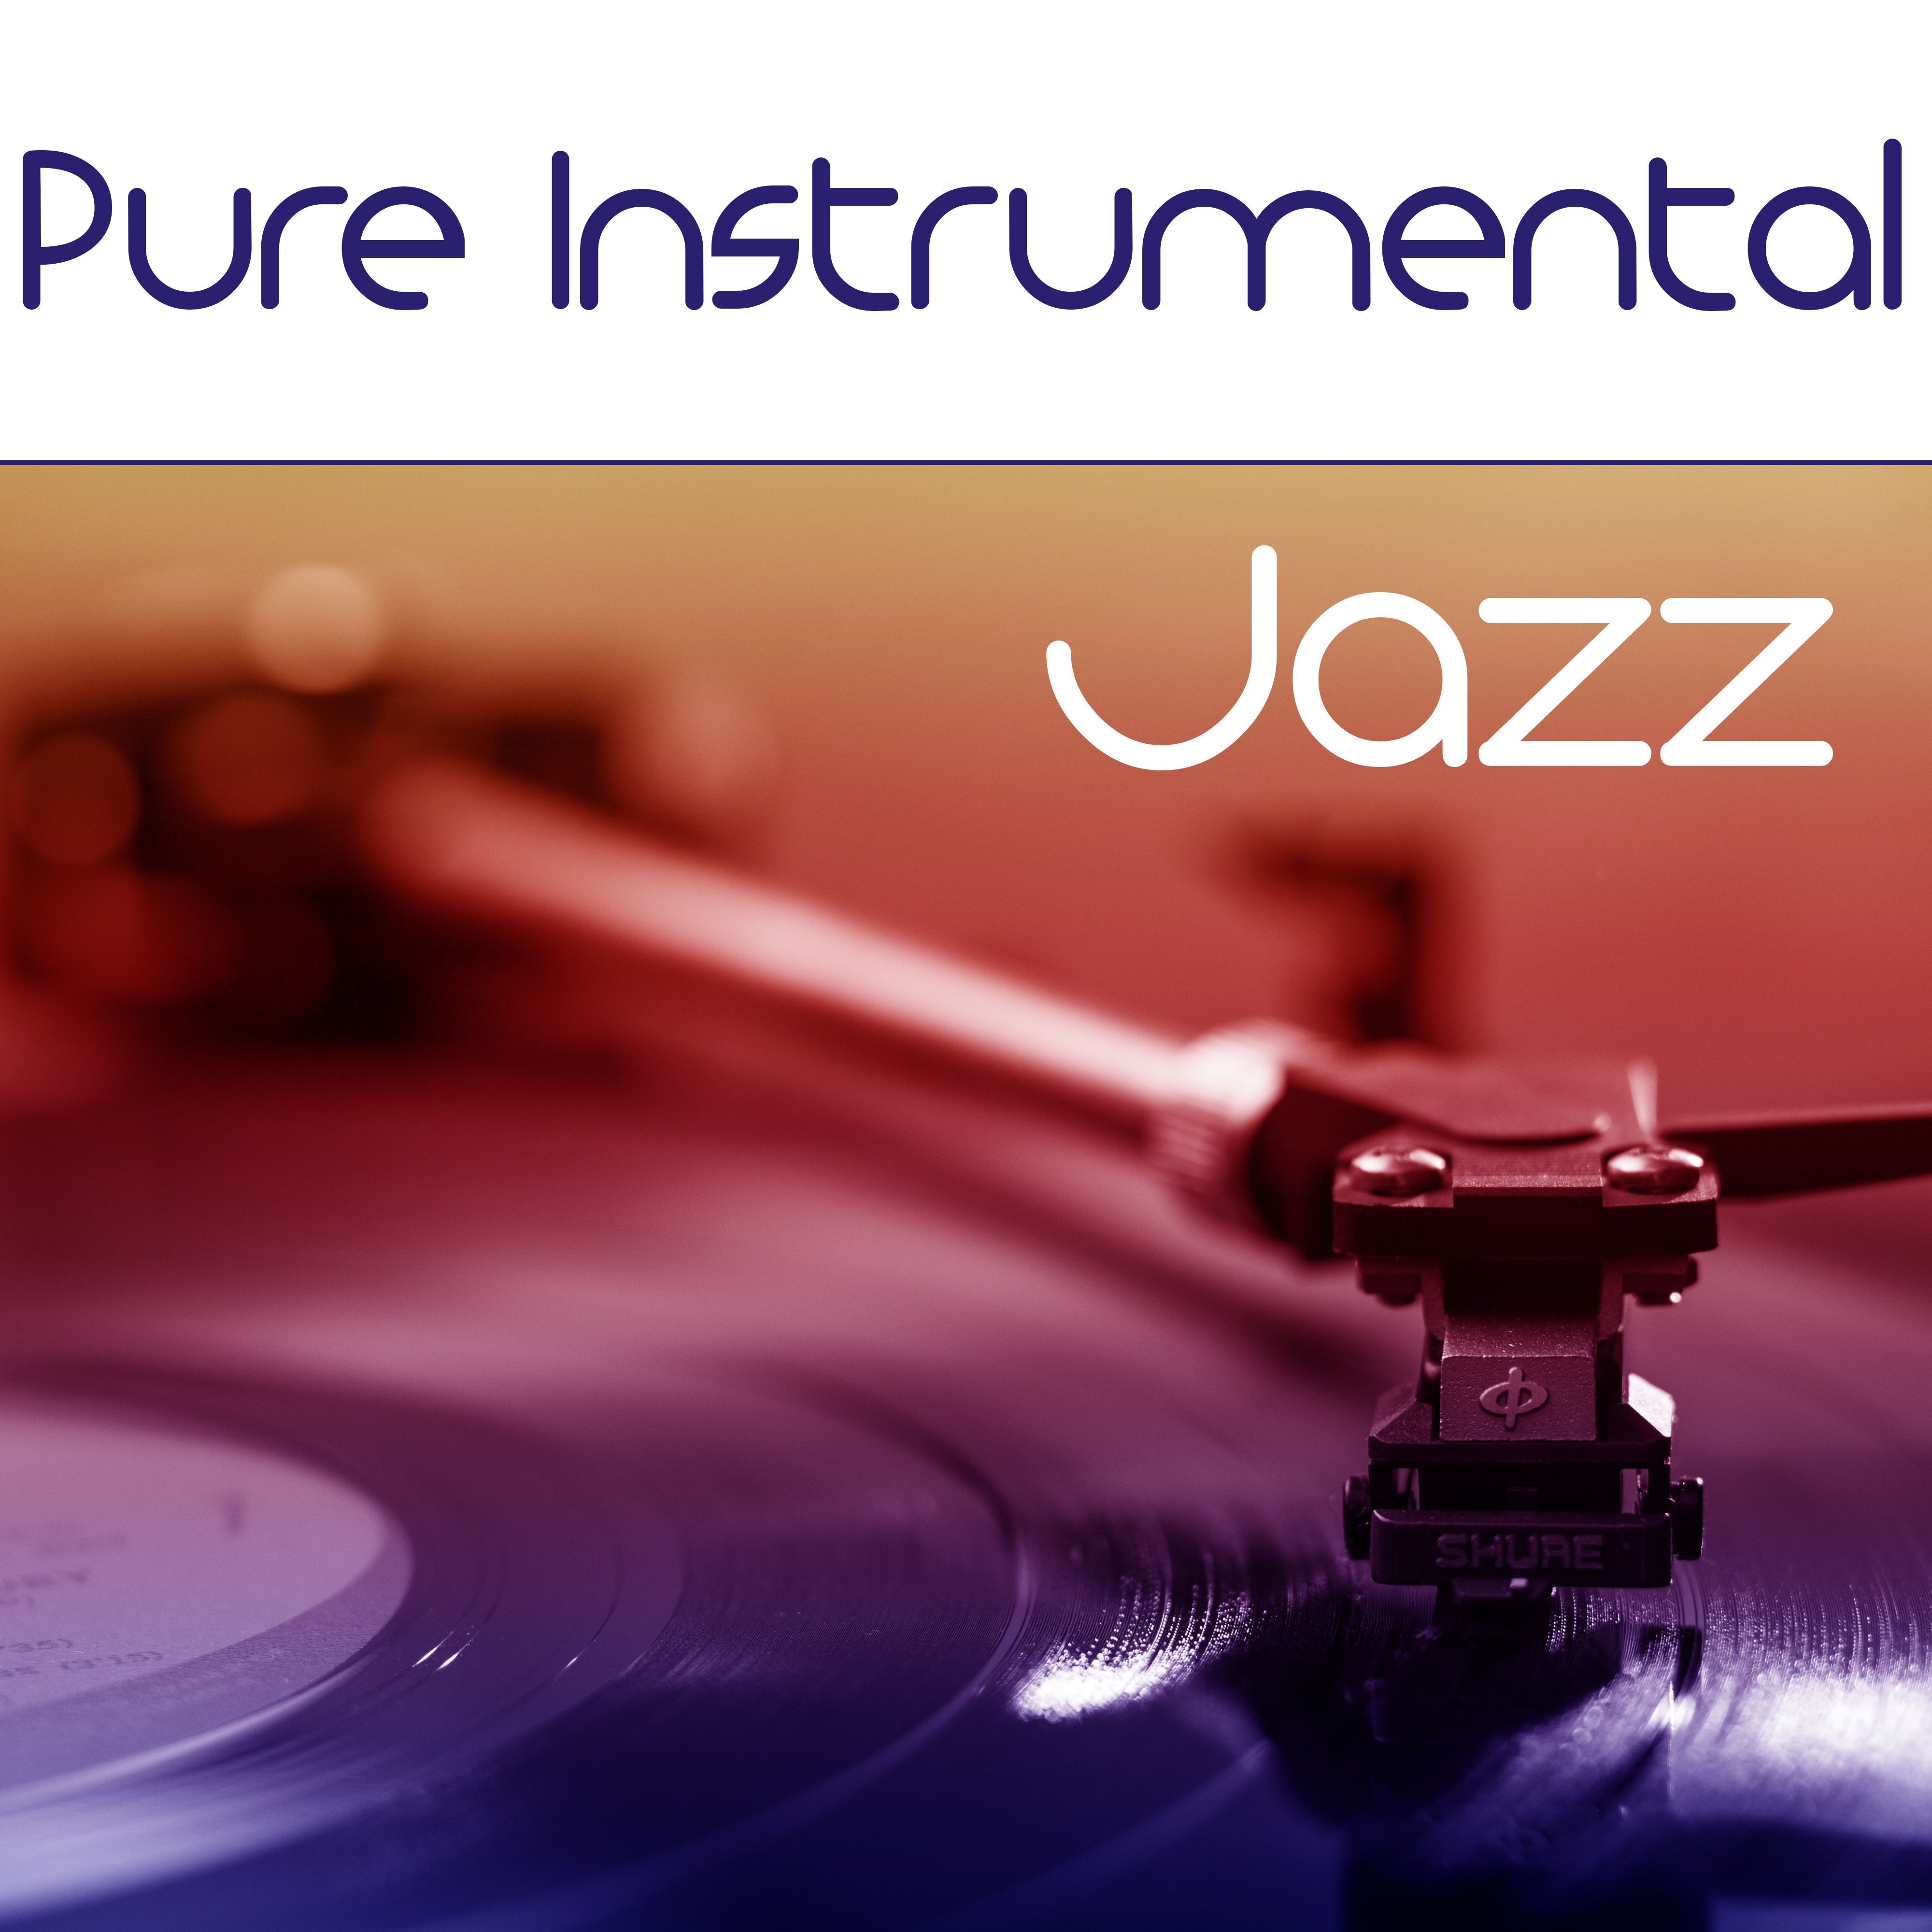 Pure Instrumental Jazz  Ambient Instrumental Jazz Sounds for Relaxation, Jazz Inspirations